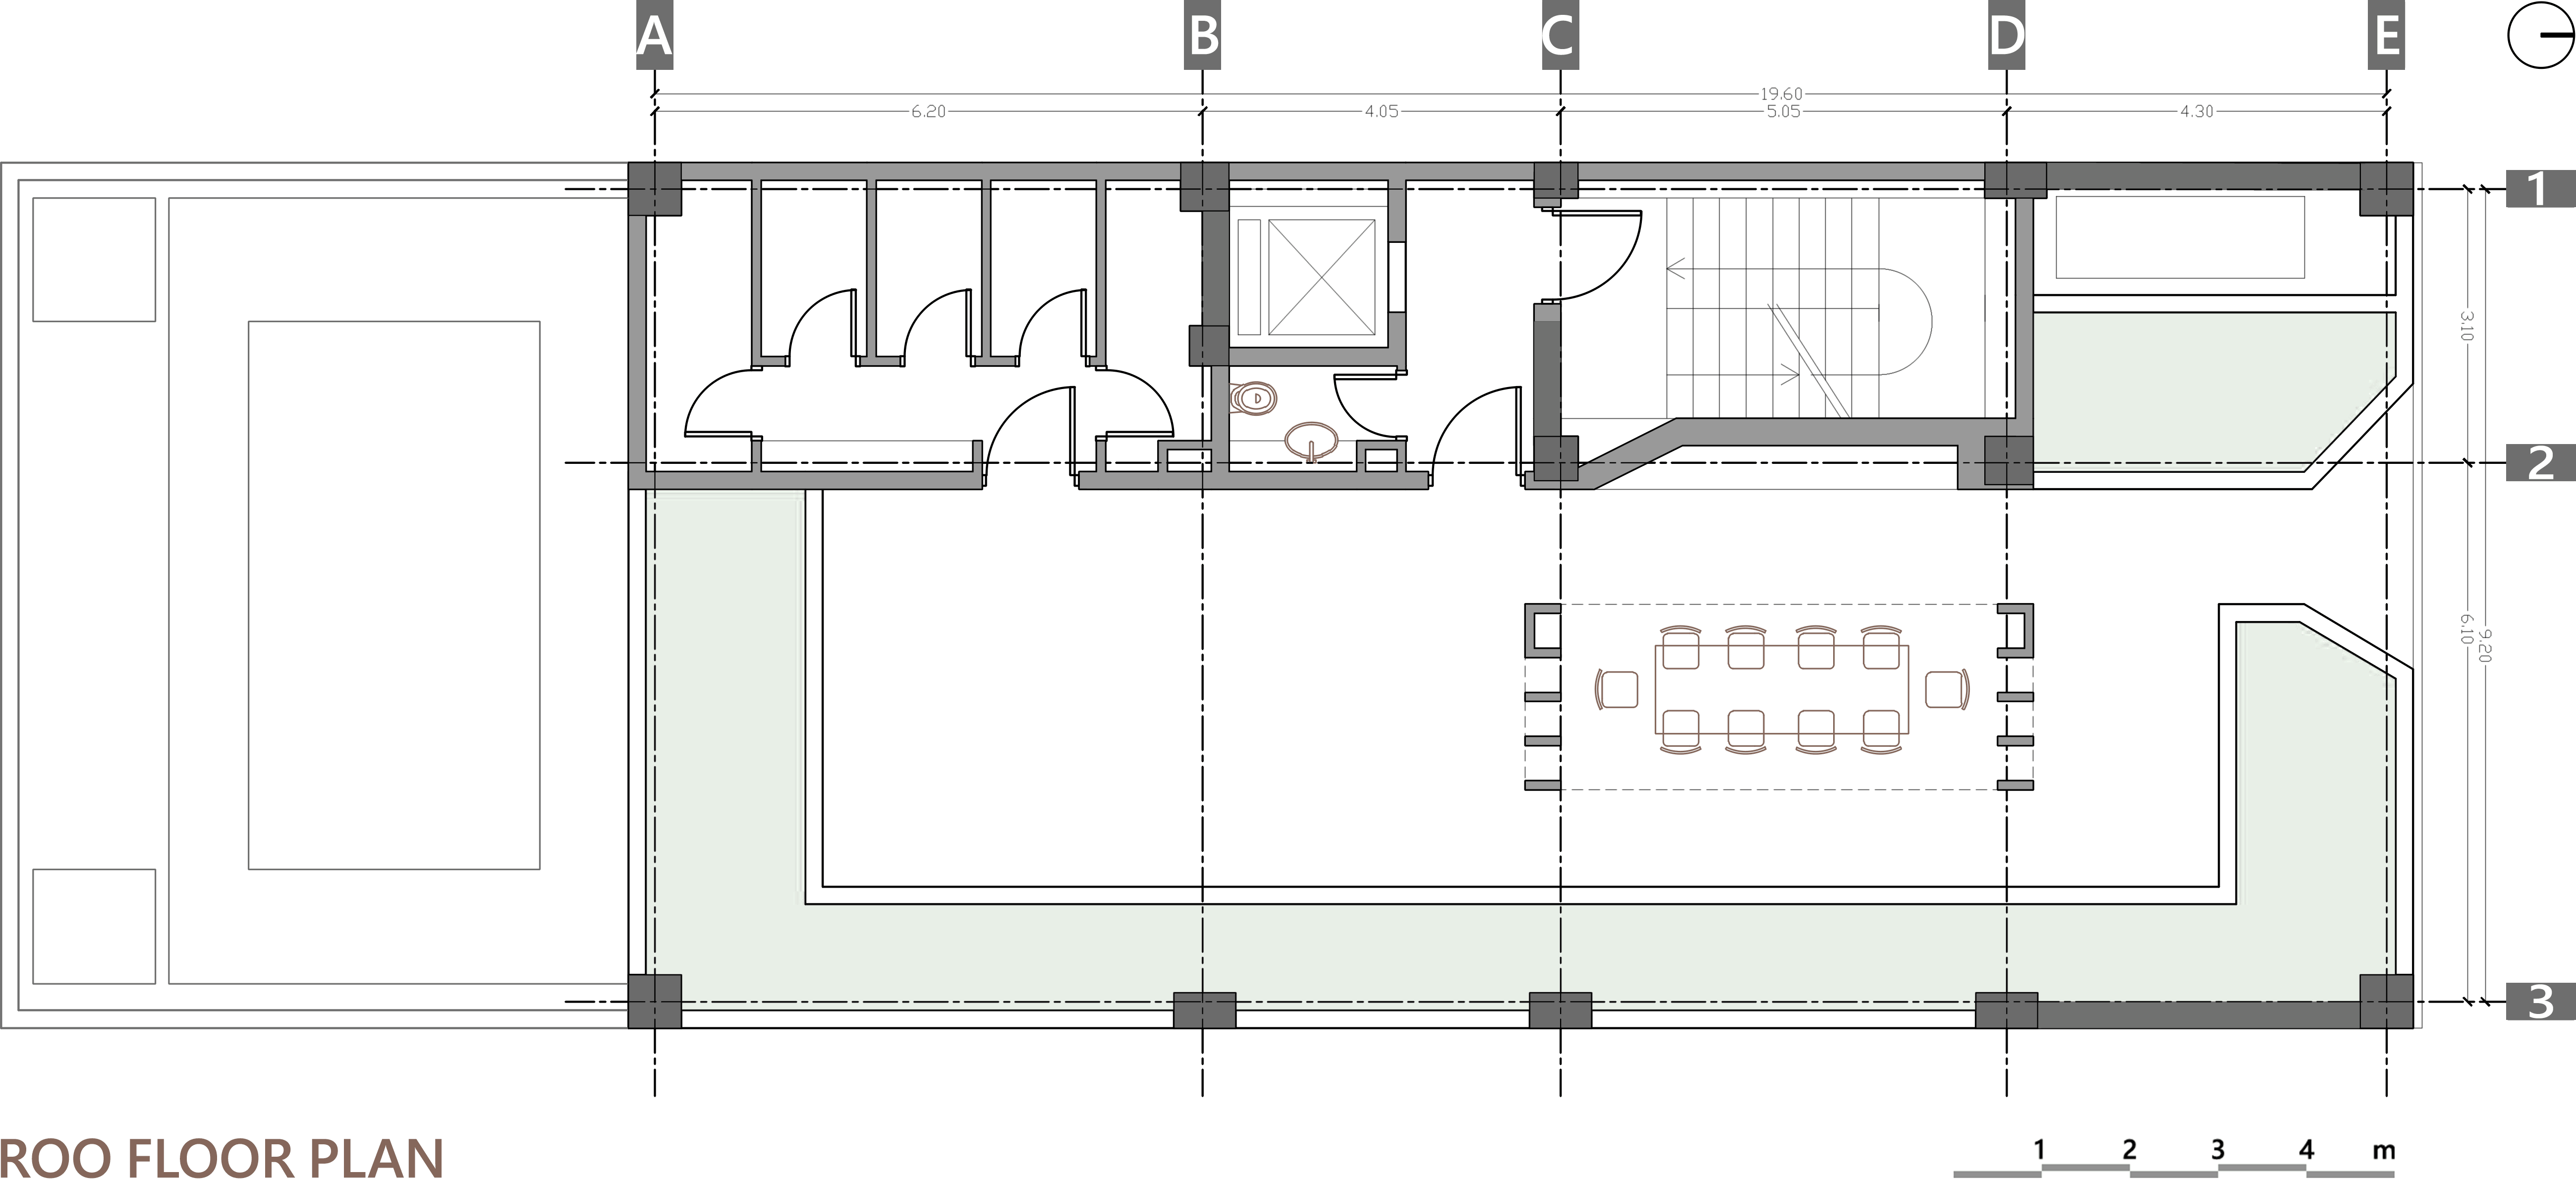 roof floor plan, 93 st. residentail aratment